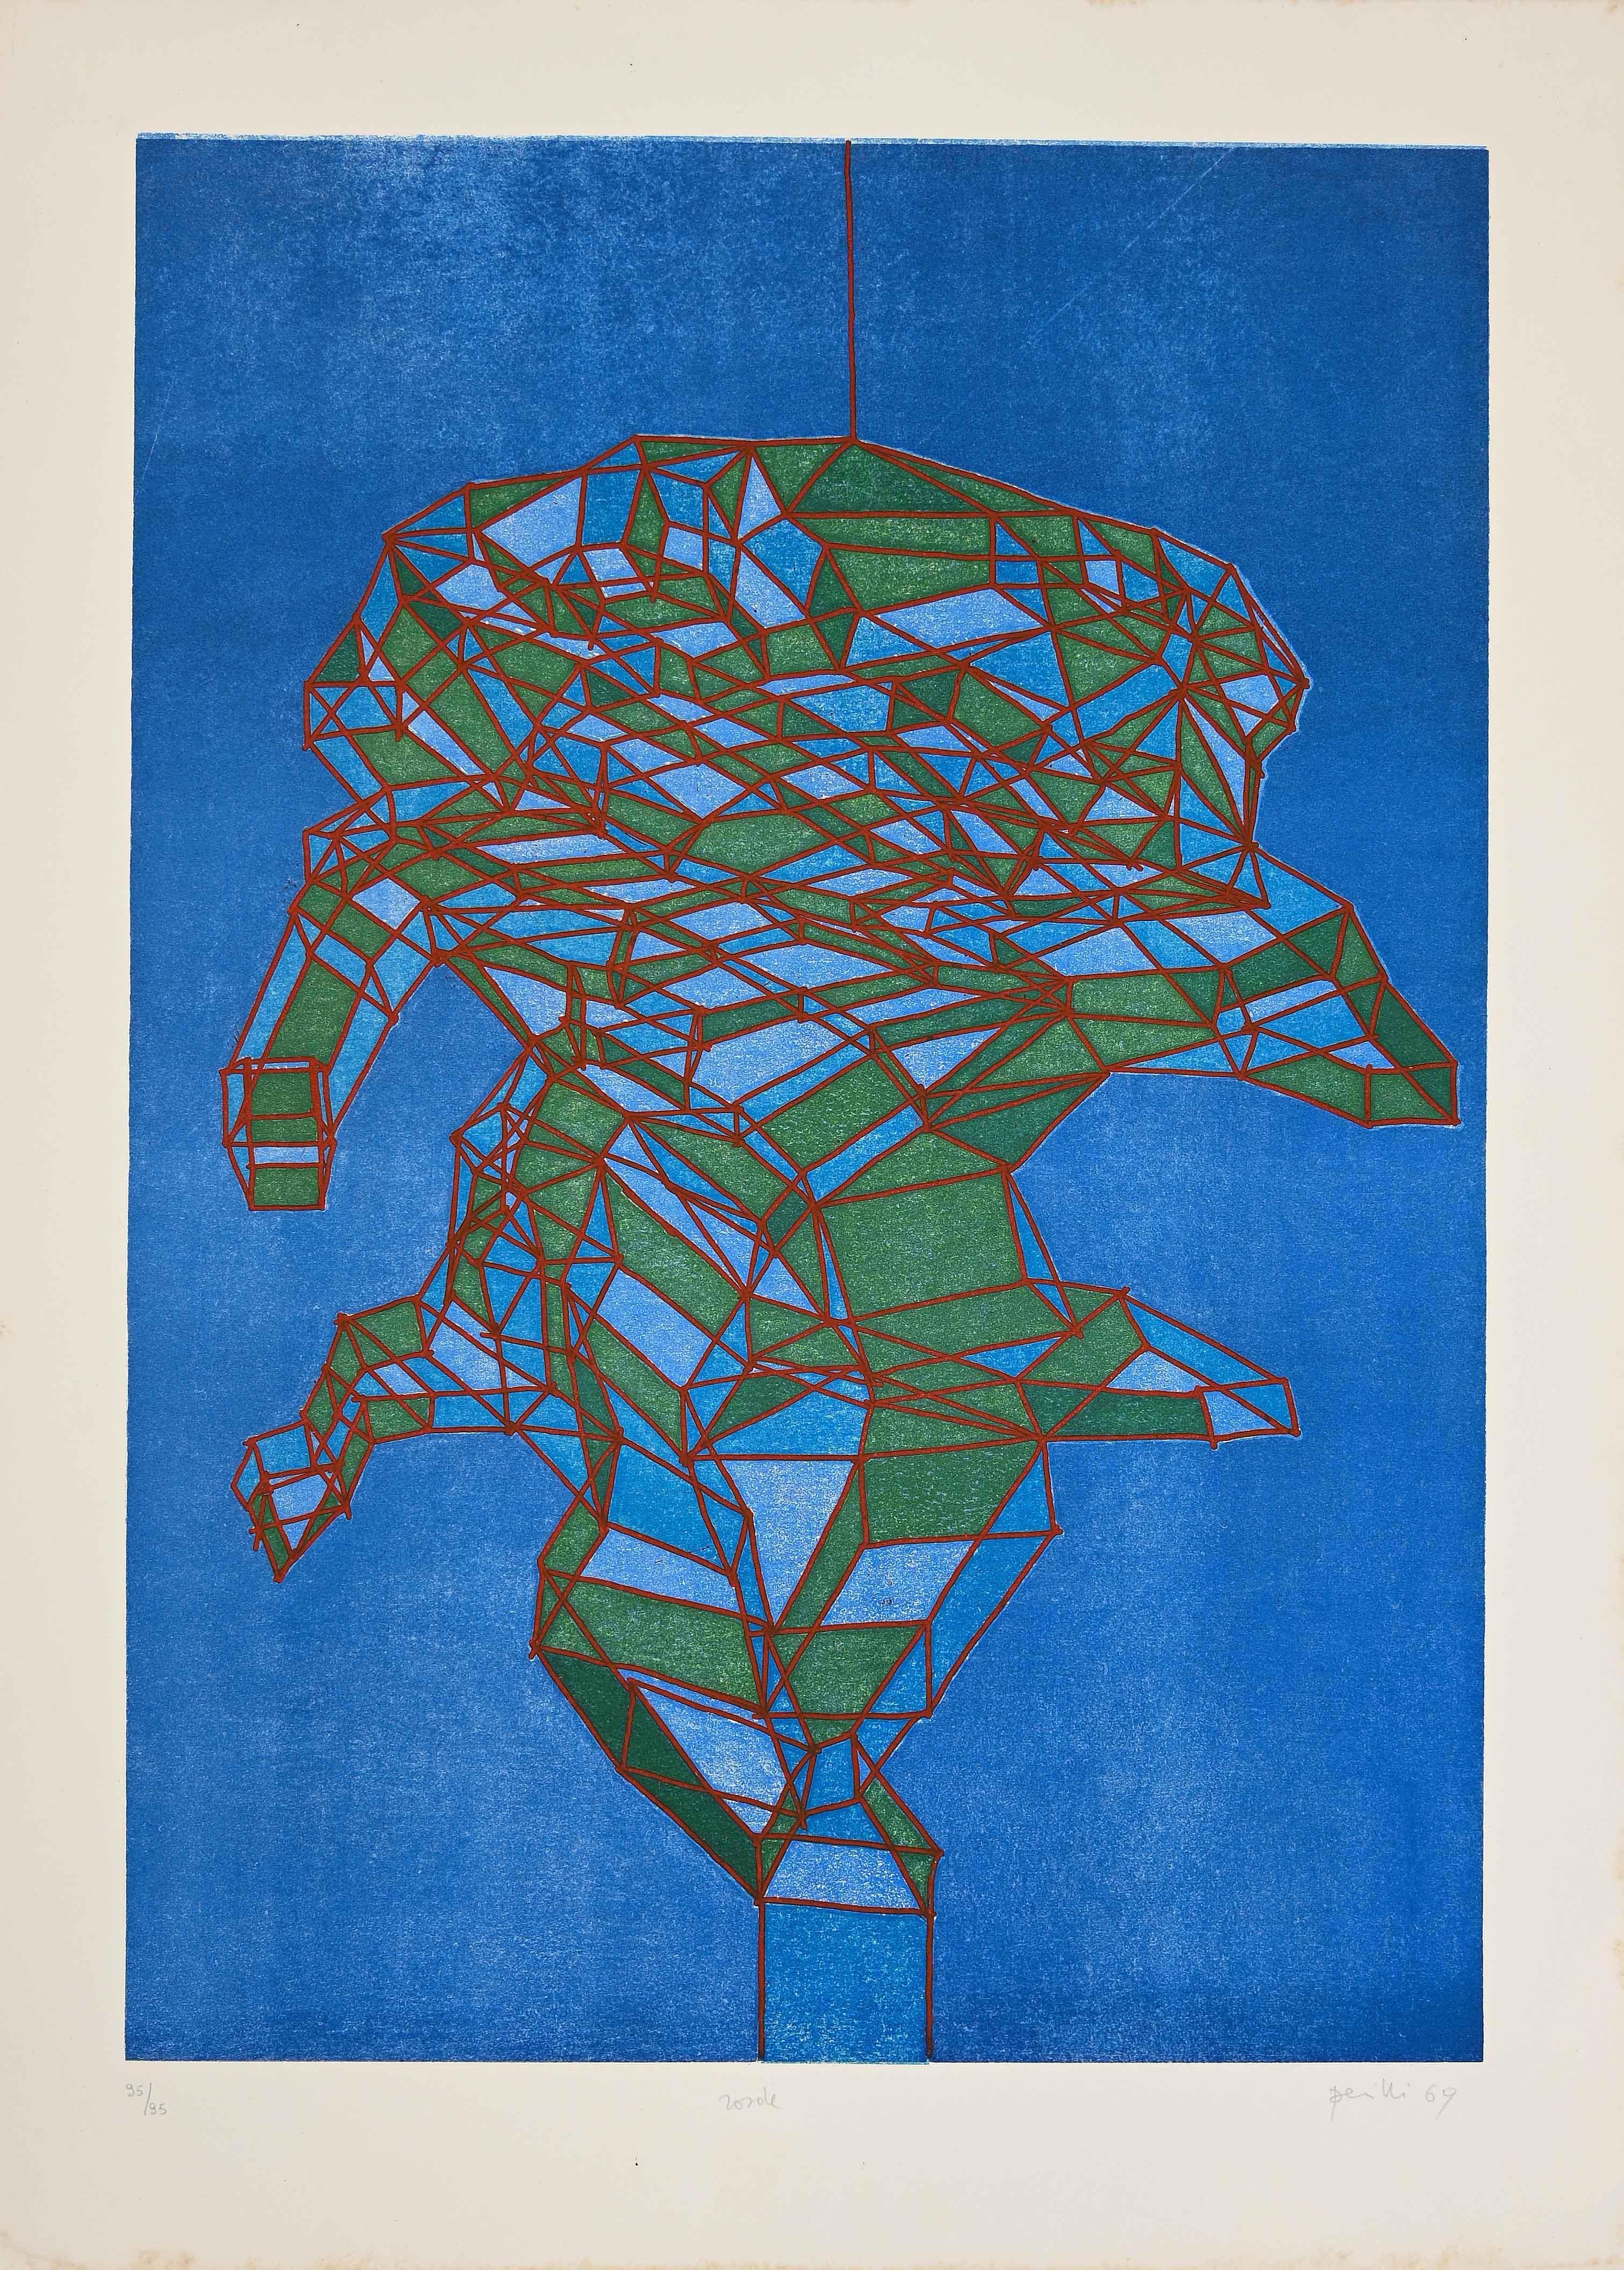 Achille Perilli Abstract Print - Rosole - Original Etching by A. Perilli - 1969